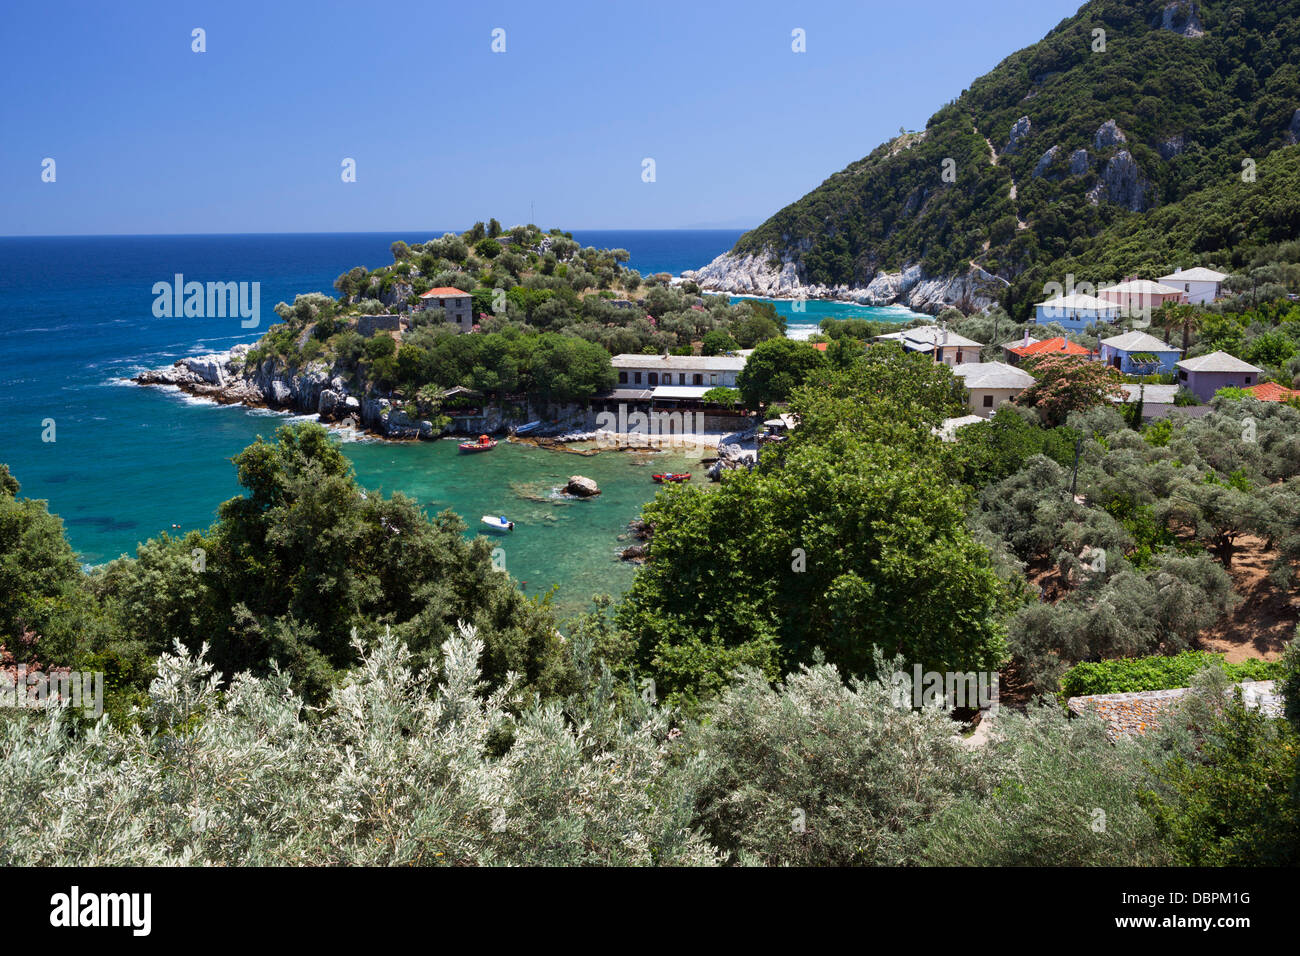 Location for the film Mamma Mia!, Damouchari, Pelion Peninsula, Thessaly,  Greece, Europe Stock Photo - Alamy